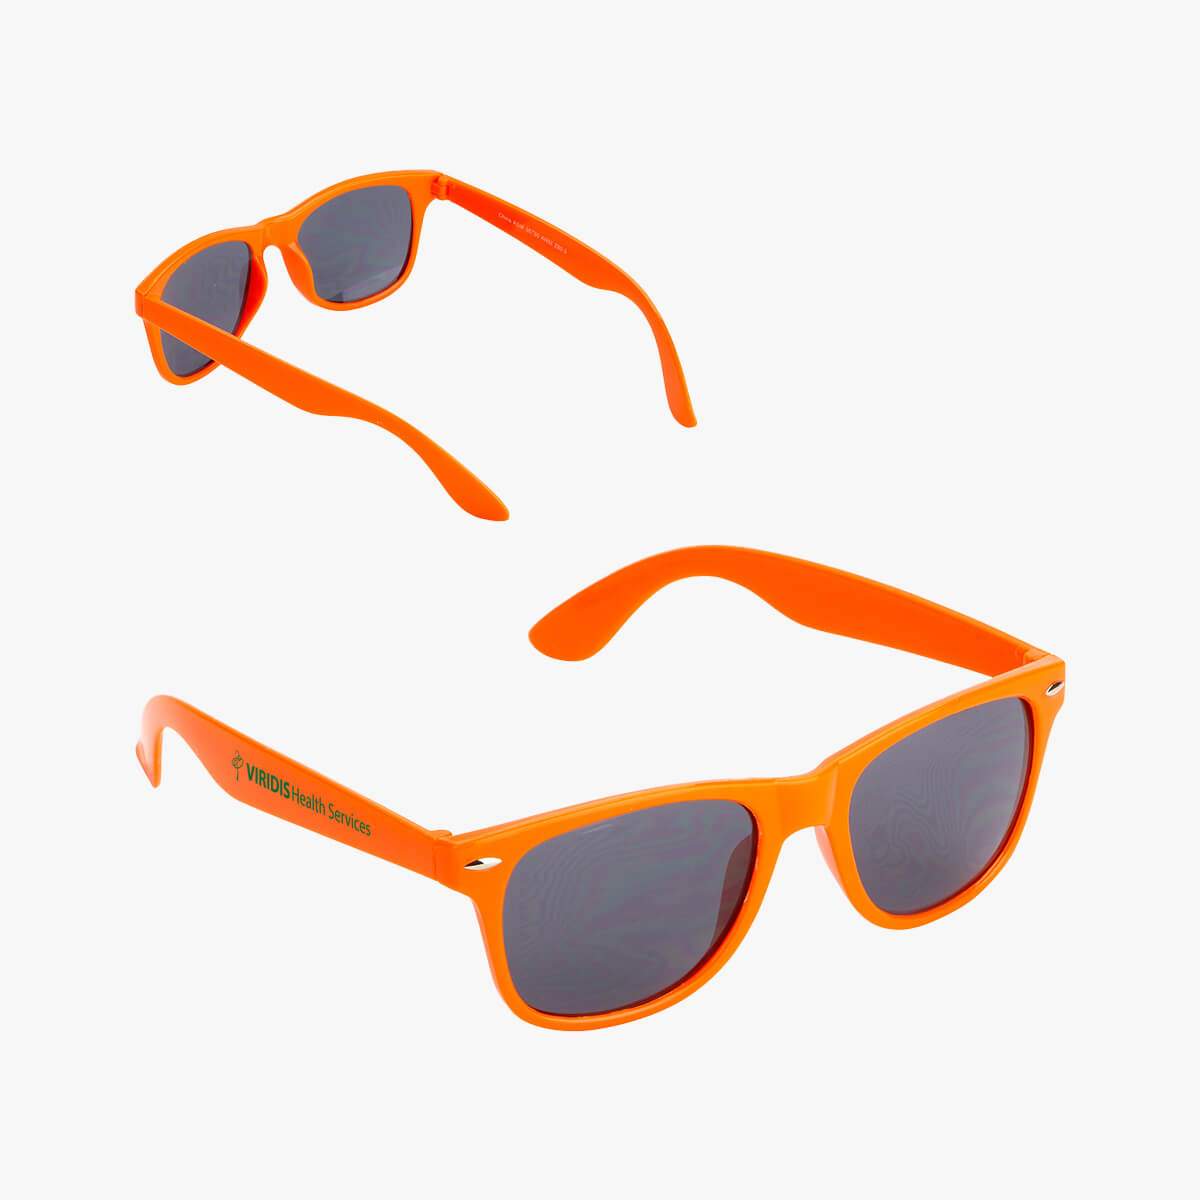 Daytona Sunglasses